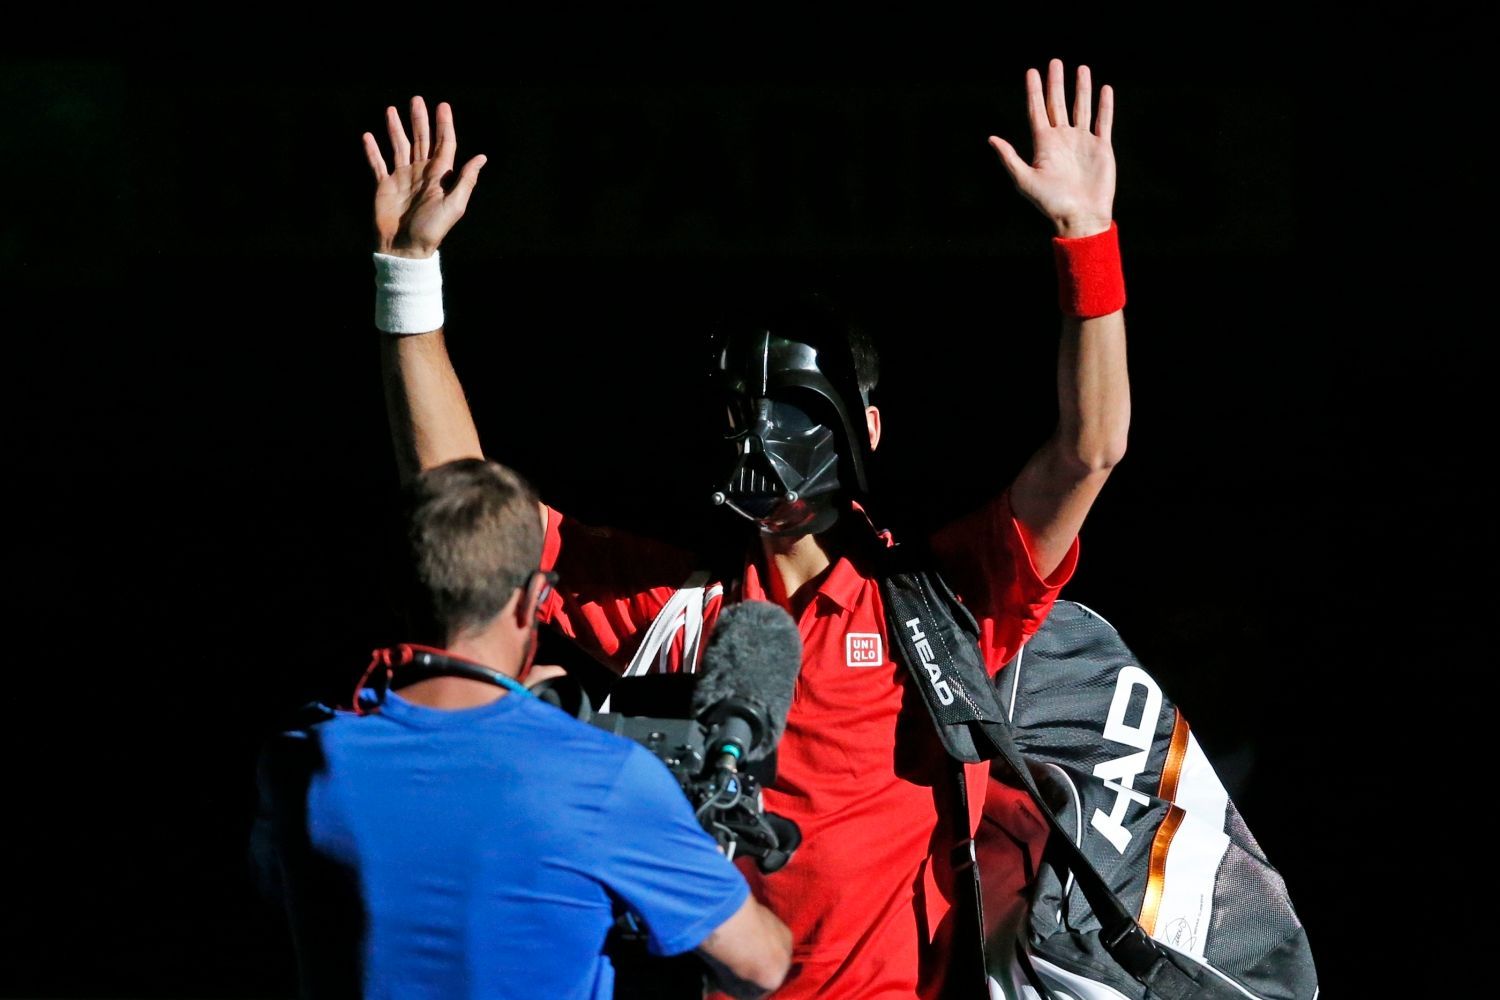 Srbský tenista Novak Djokovič v utkání s Američanem Samem Querreym v pařížském turnaji Masters 2012.